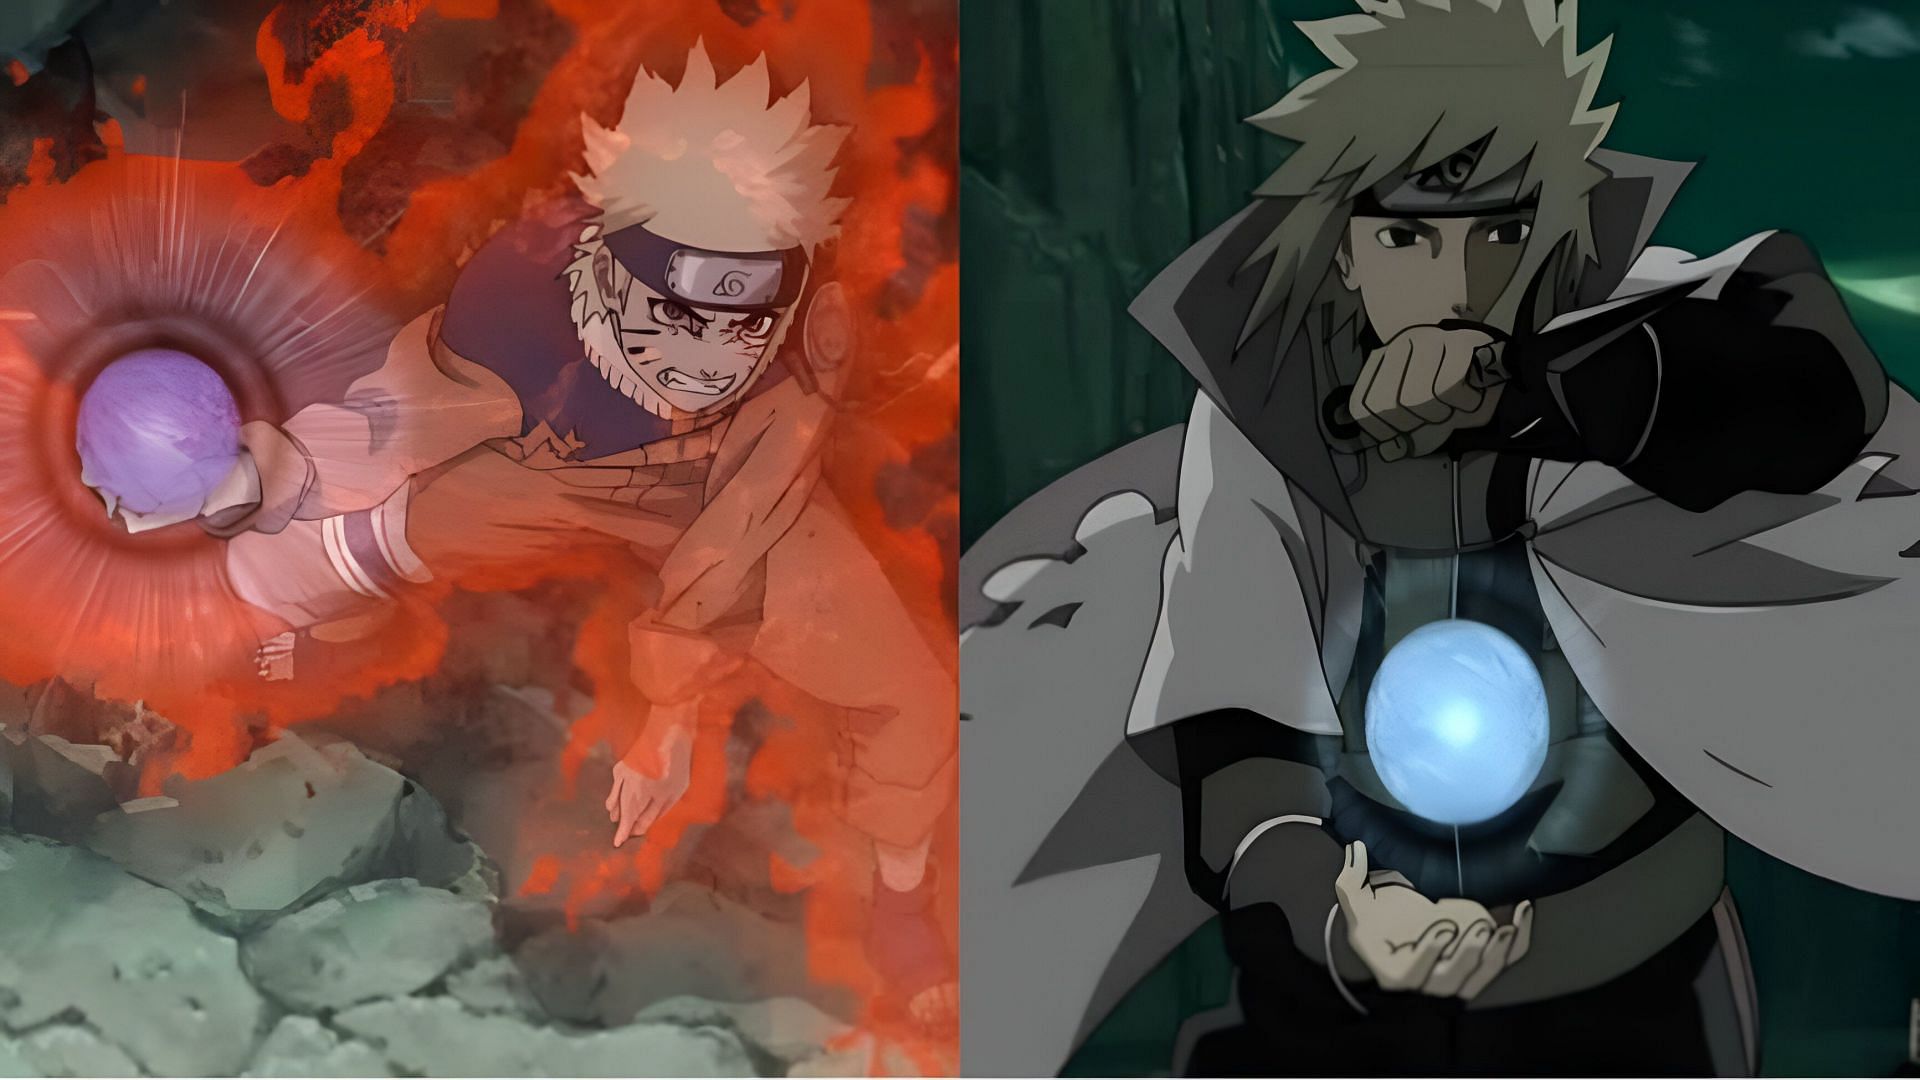 Naruto (left) and Minato (right) as seen in the anime (Image via Studio Pierrot)